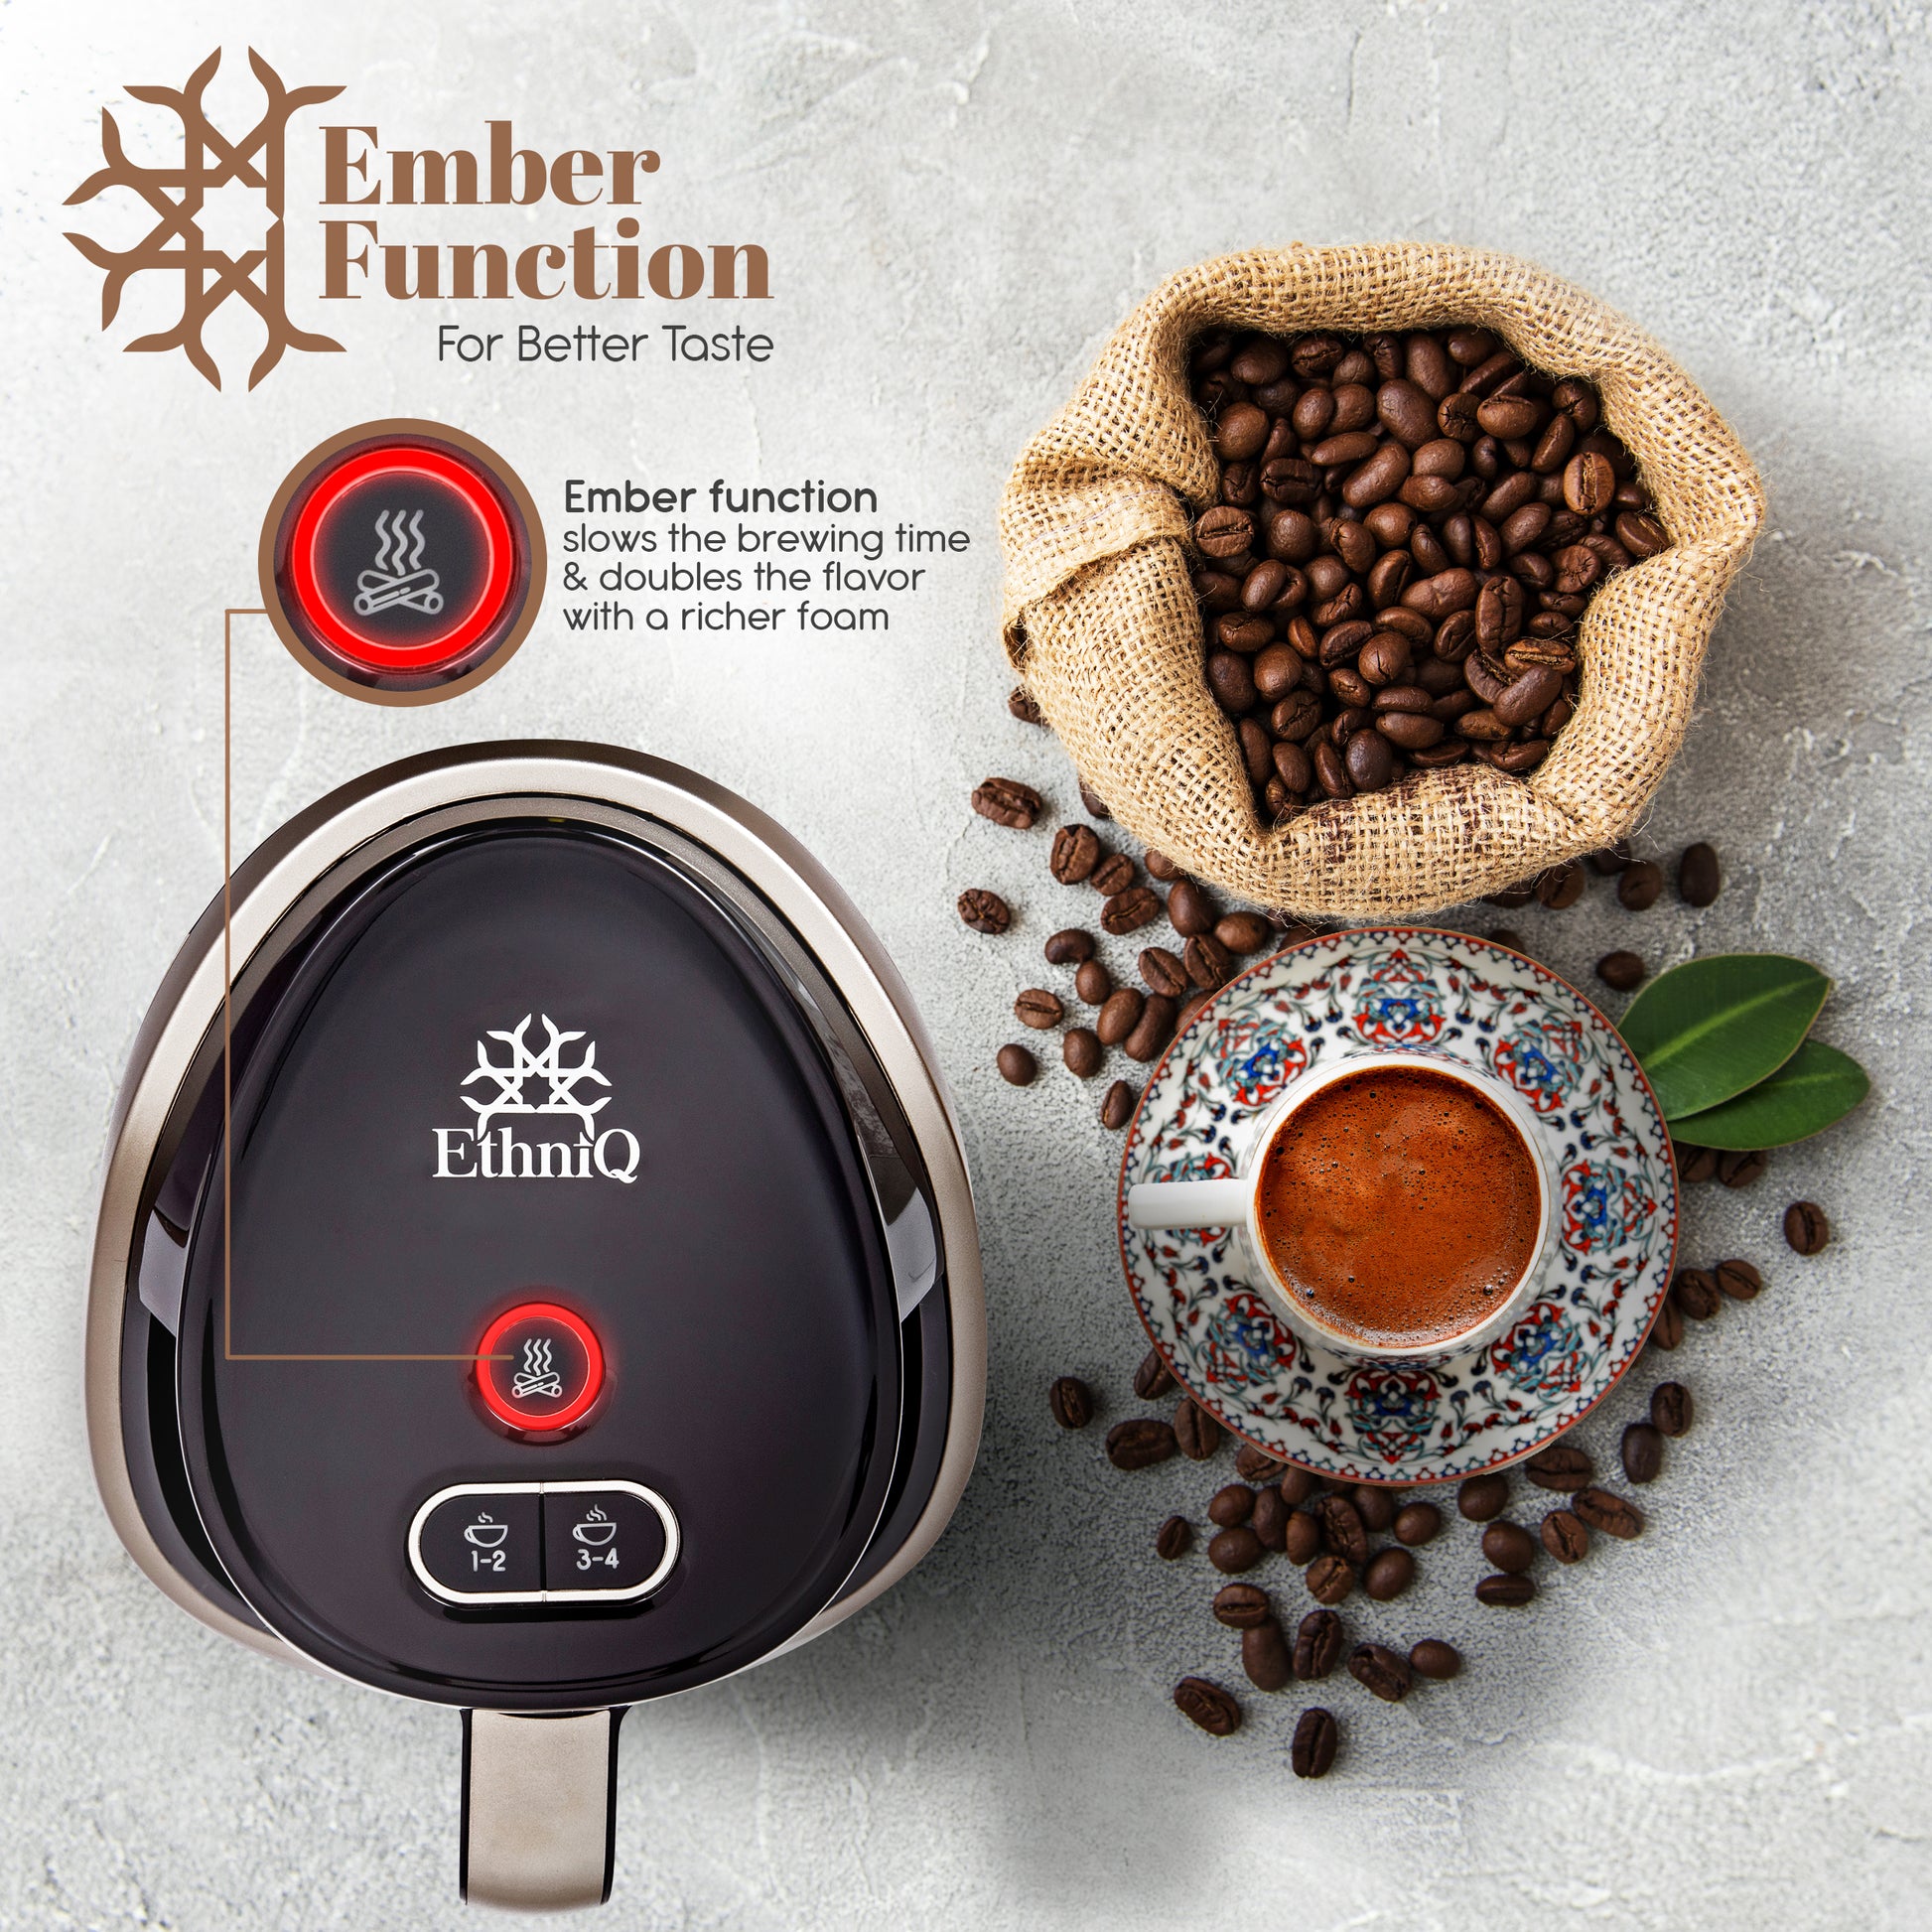 Saki Automatic Electric Turkish Coffee Maker with Cook Sense Technology,  Black, 1 Piece - Ralphs